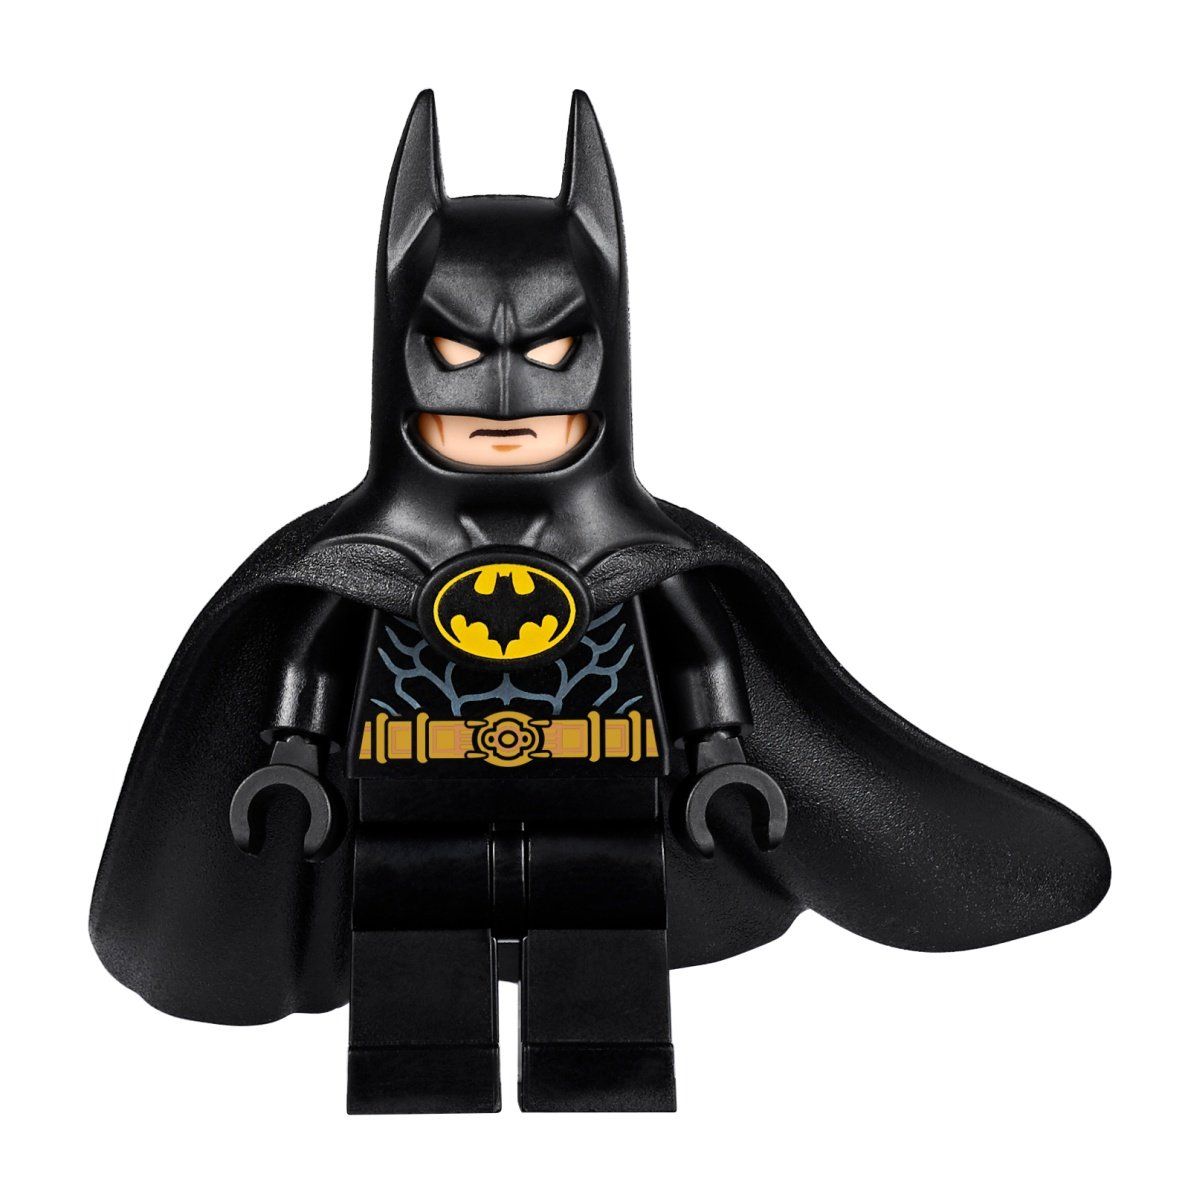 LEGO Batman 76139 1989 Batmobile: Offizielle Bilder, Preis & Verfügbarkeit